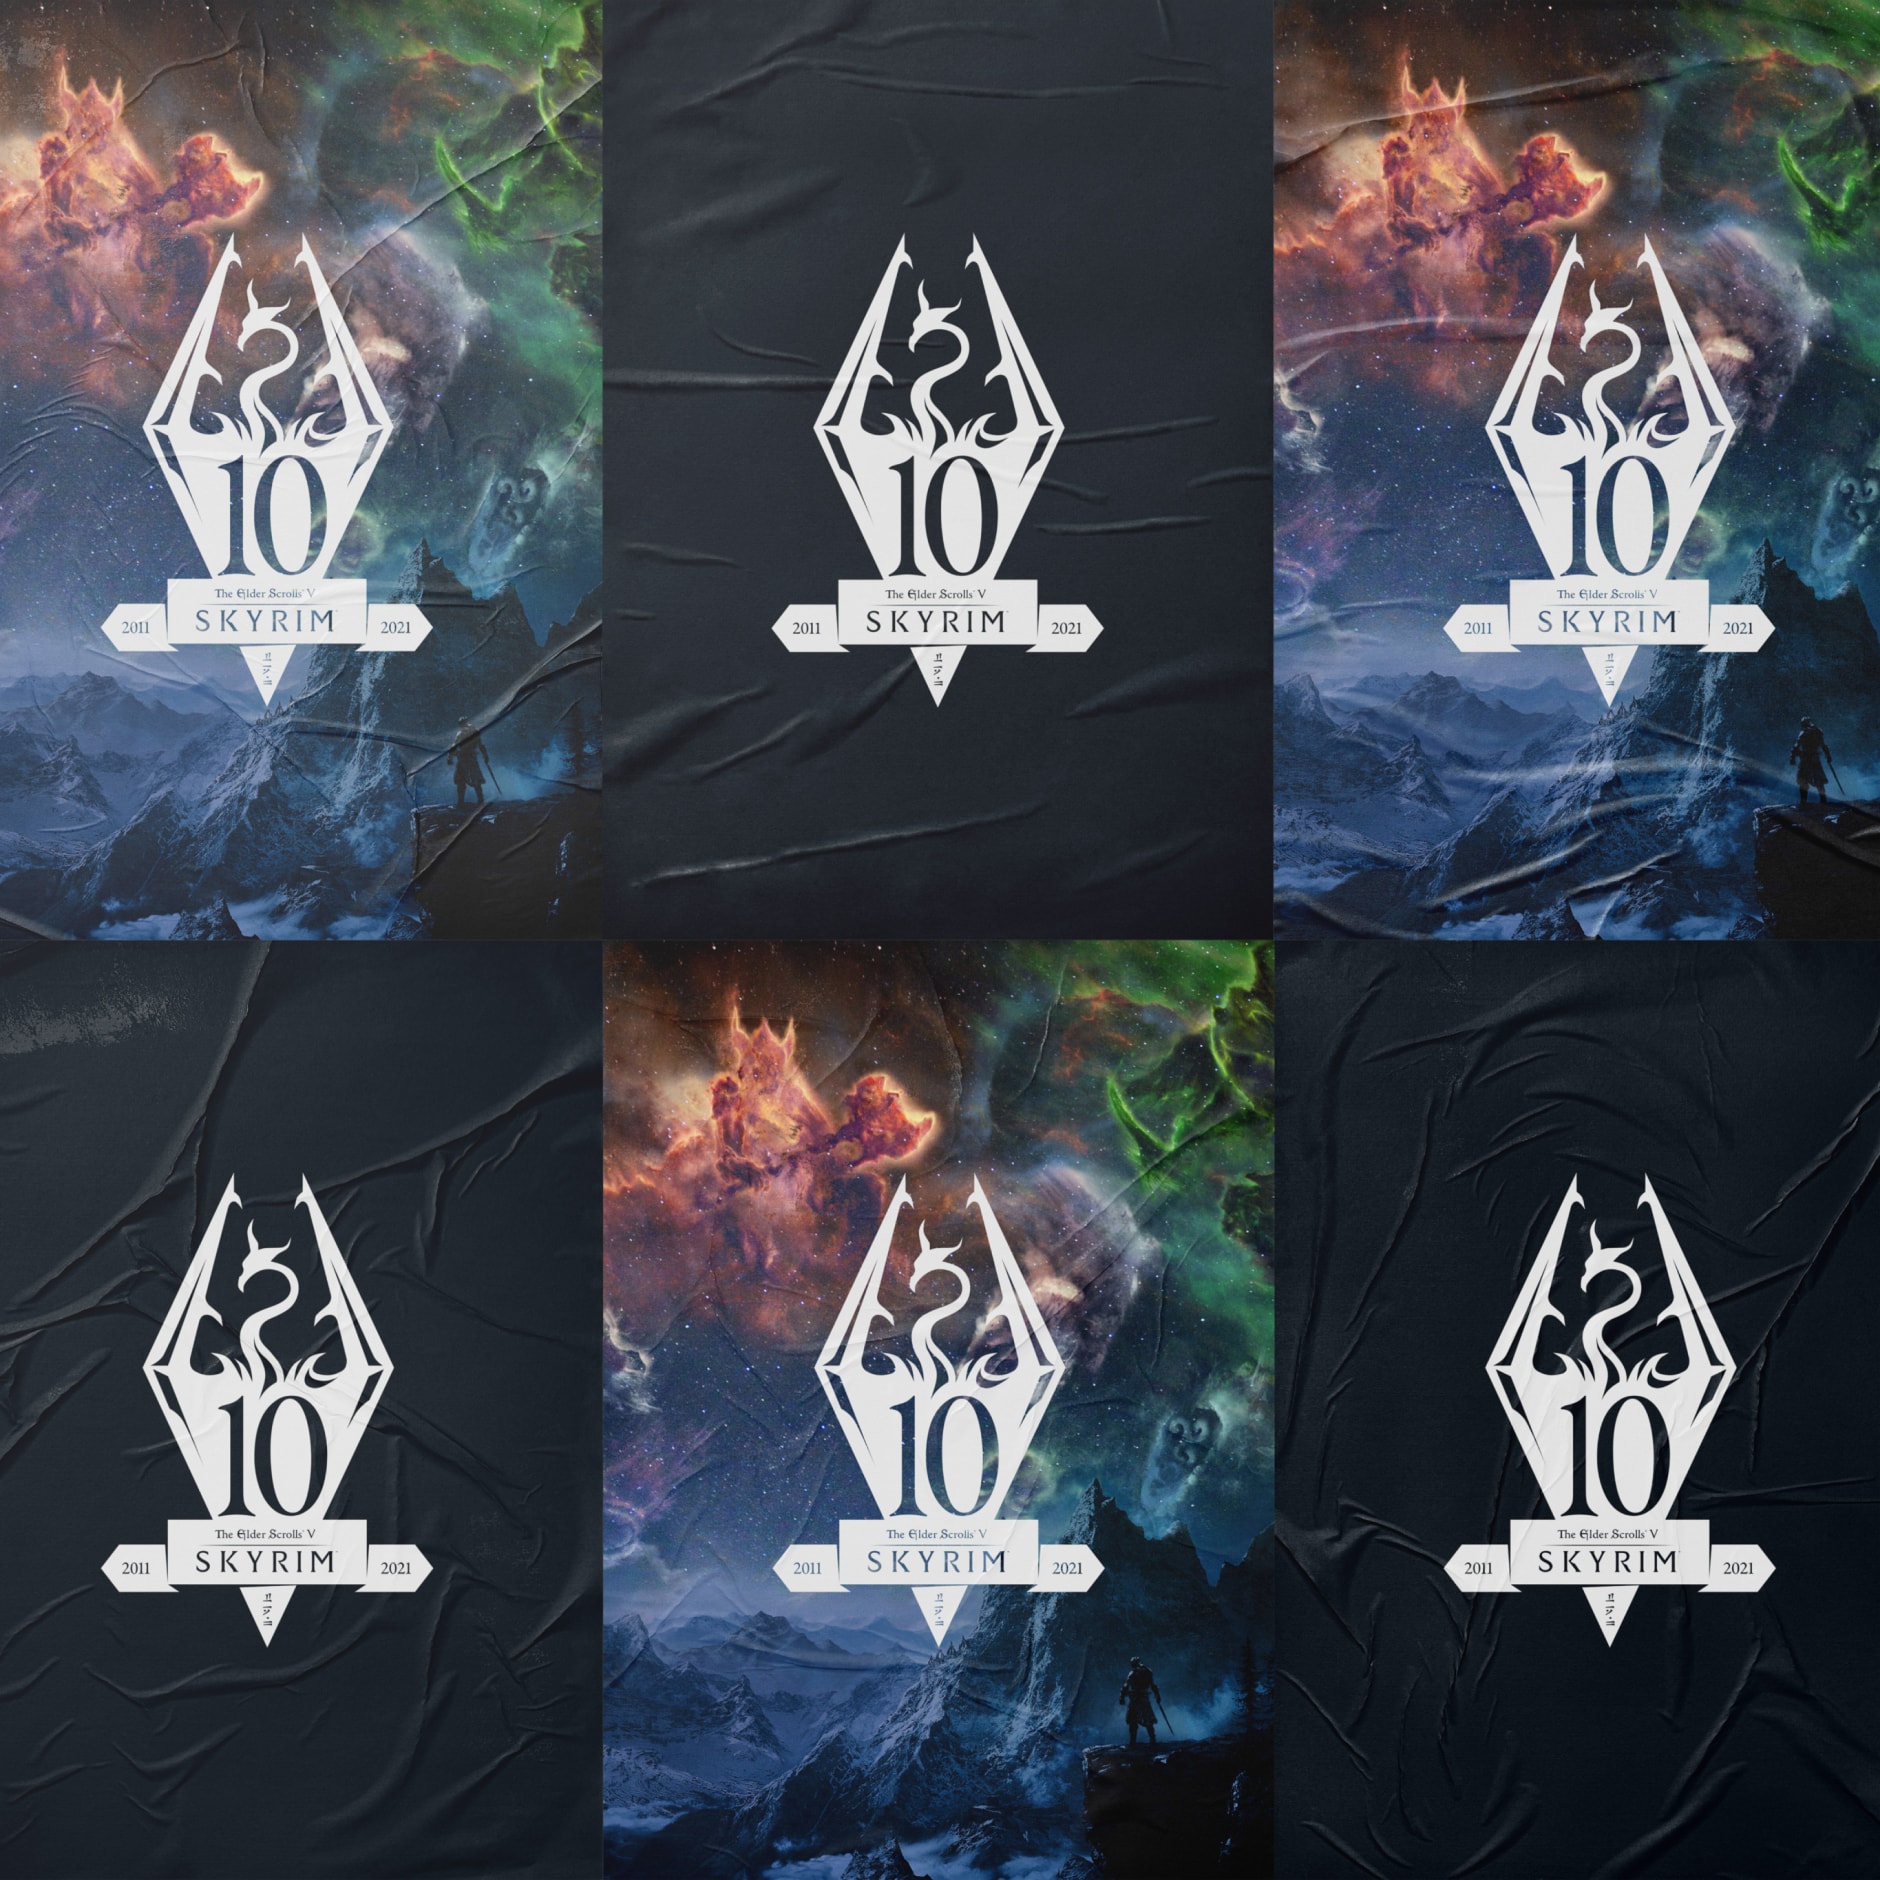 Skyrim 10th anniversary logo